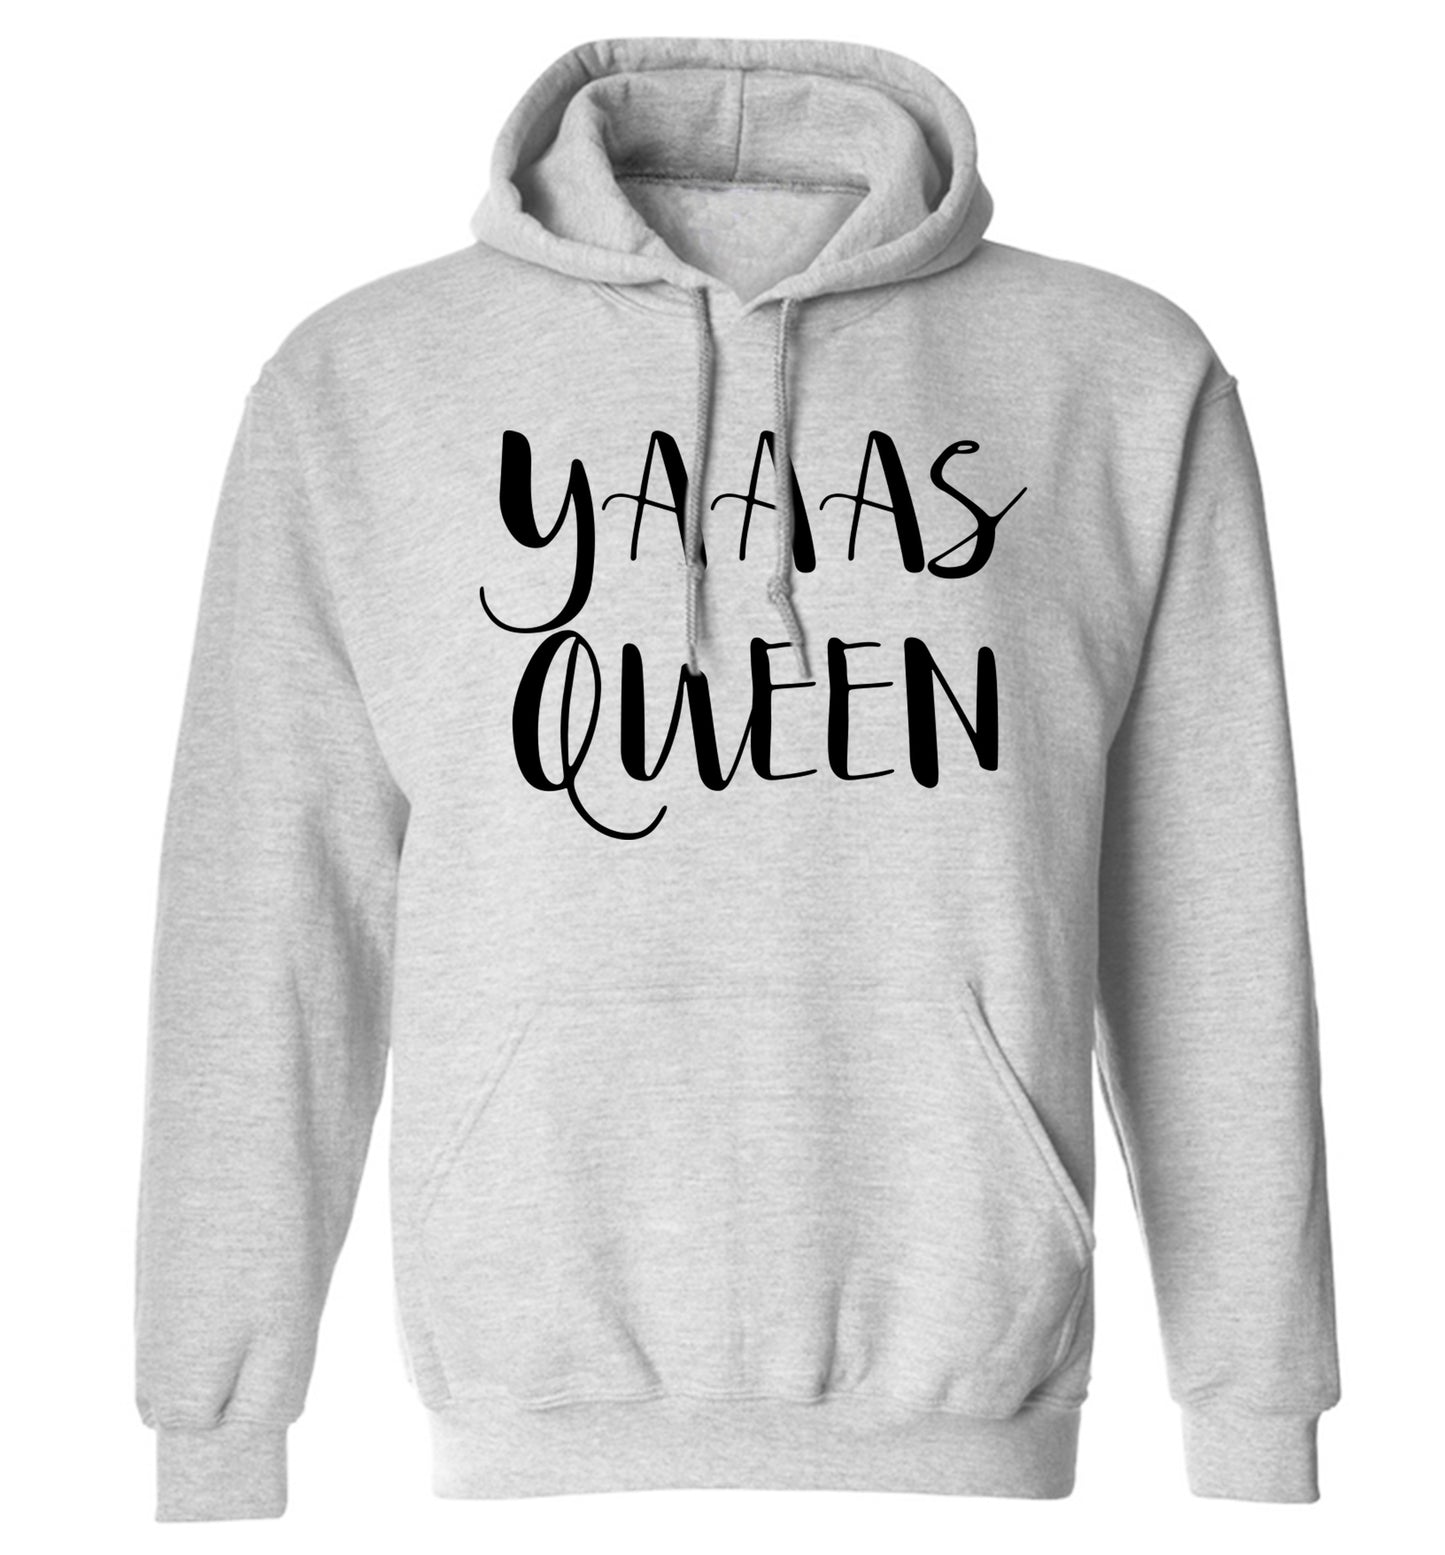 Yas Queen adults unisex grey hoodie 2XL